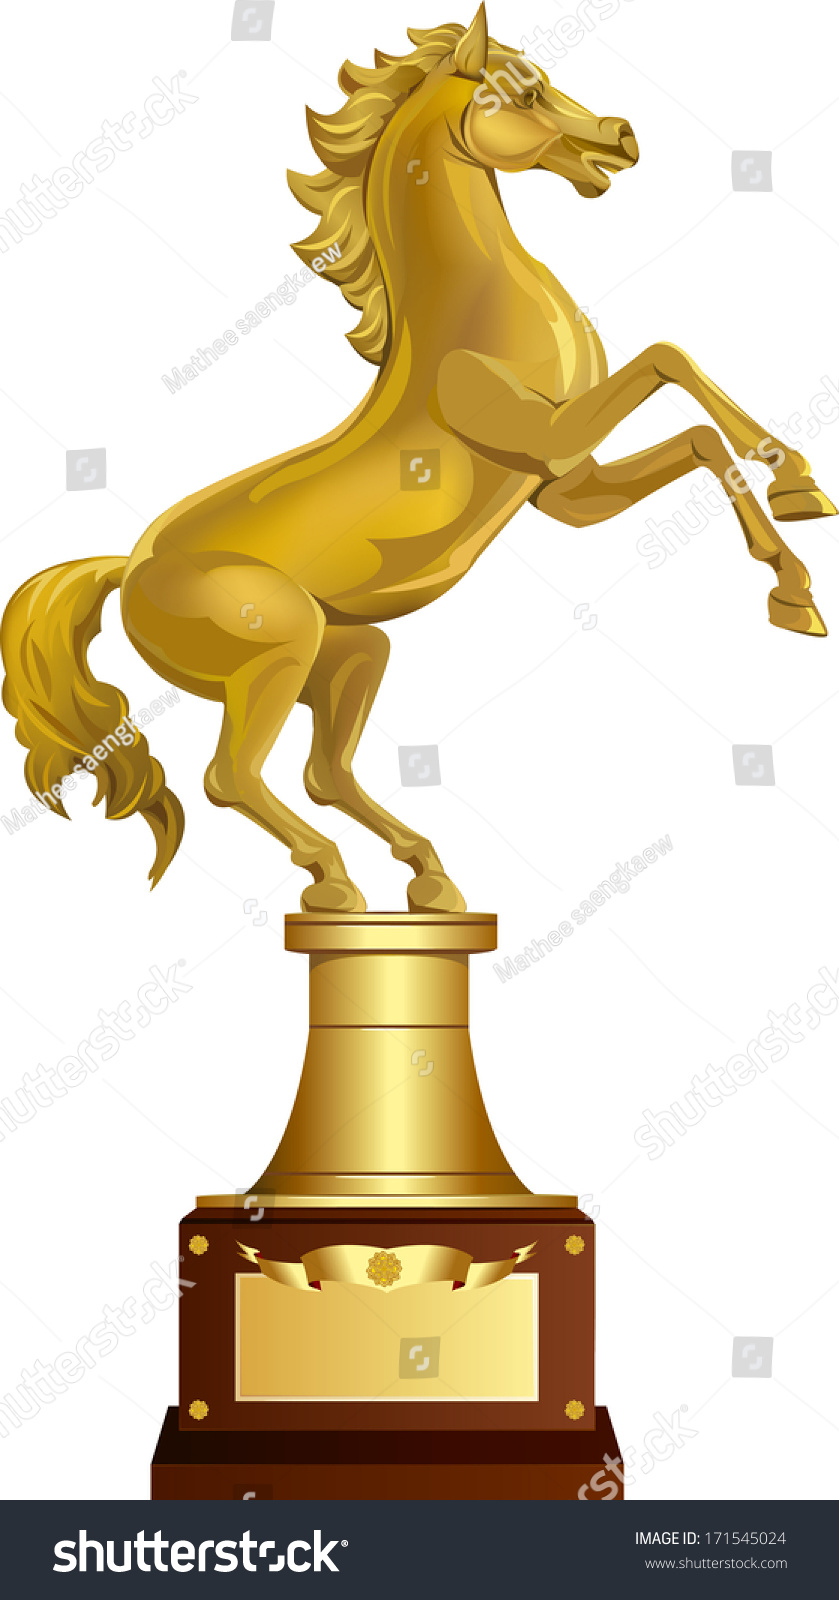 horse trophy clipart - photo #2